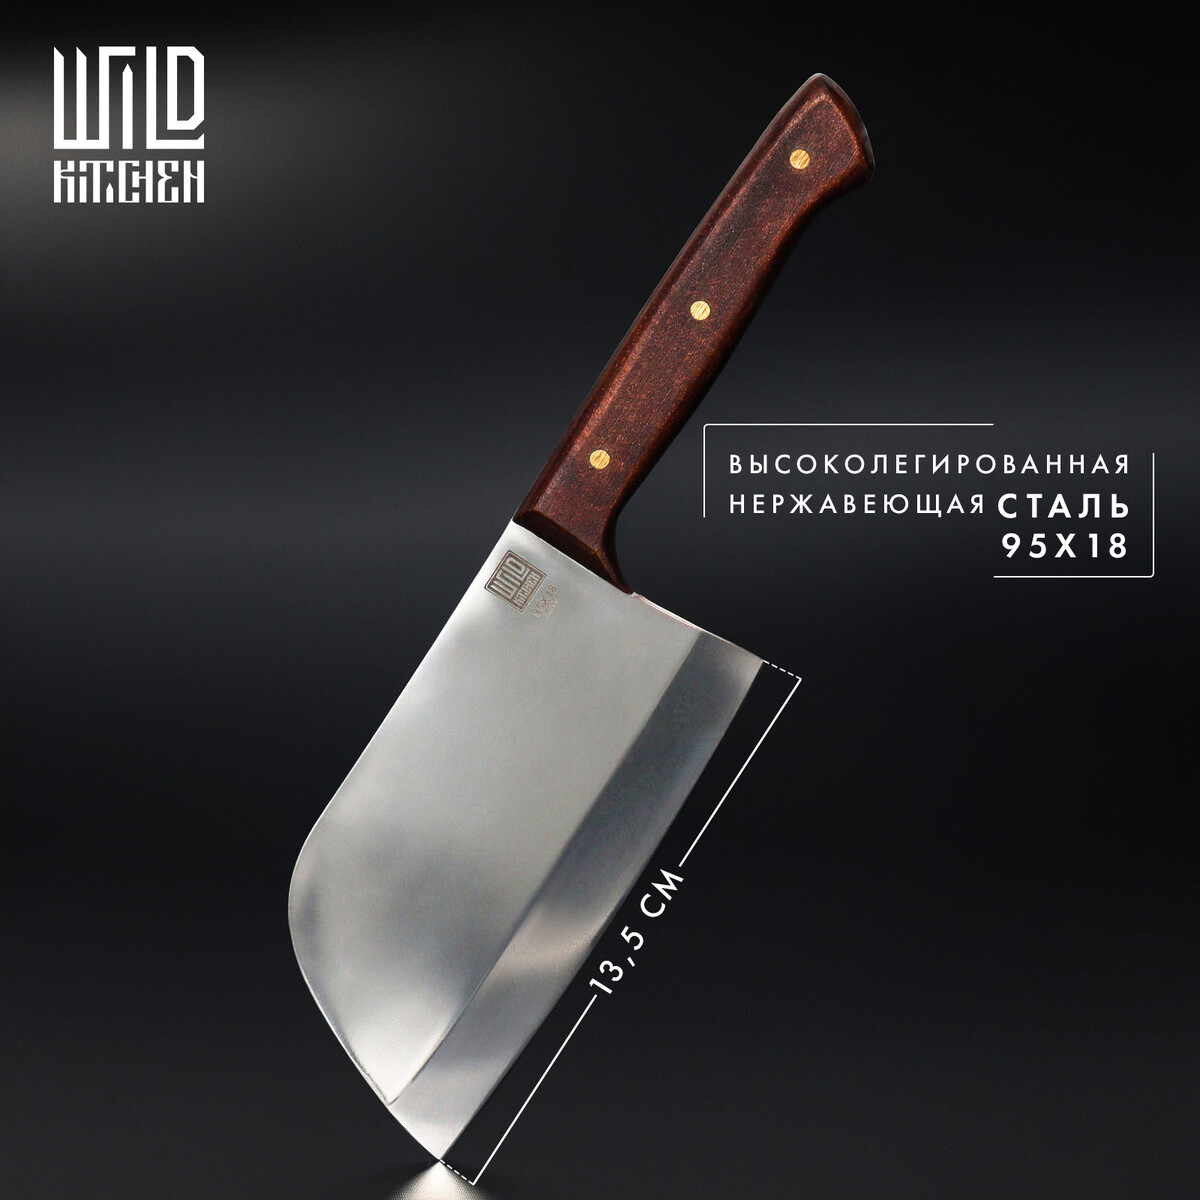 Нож - топорик малый wild kitchen, сталь 95×18, лезвие 13,5 см нож топорик большой wild kitchen сталь 95×18 лезвие 19 5 см